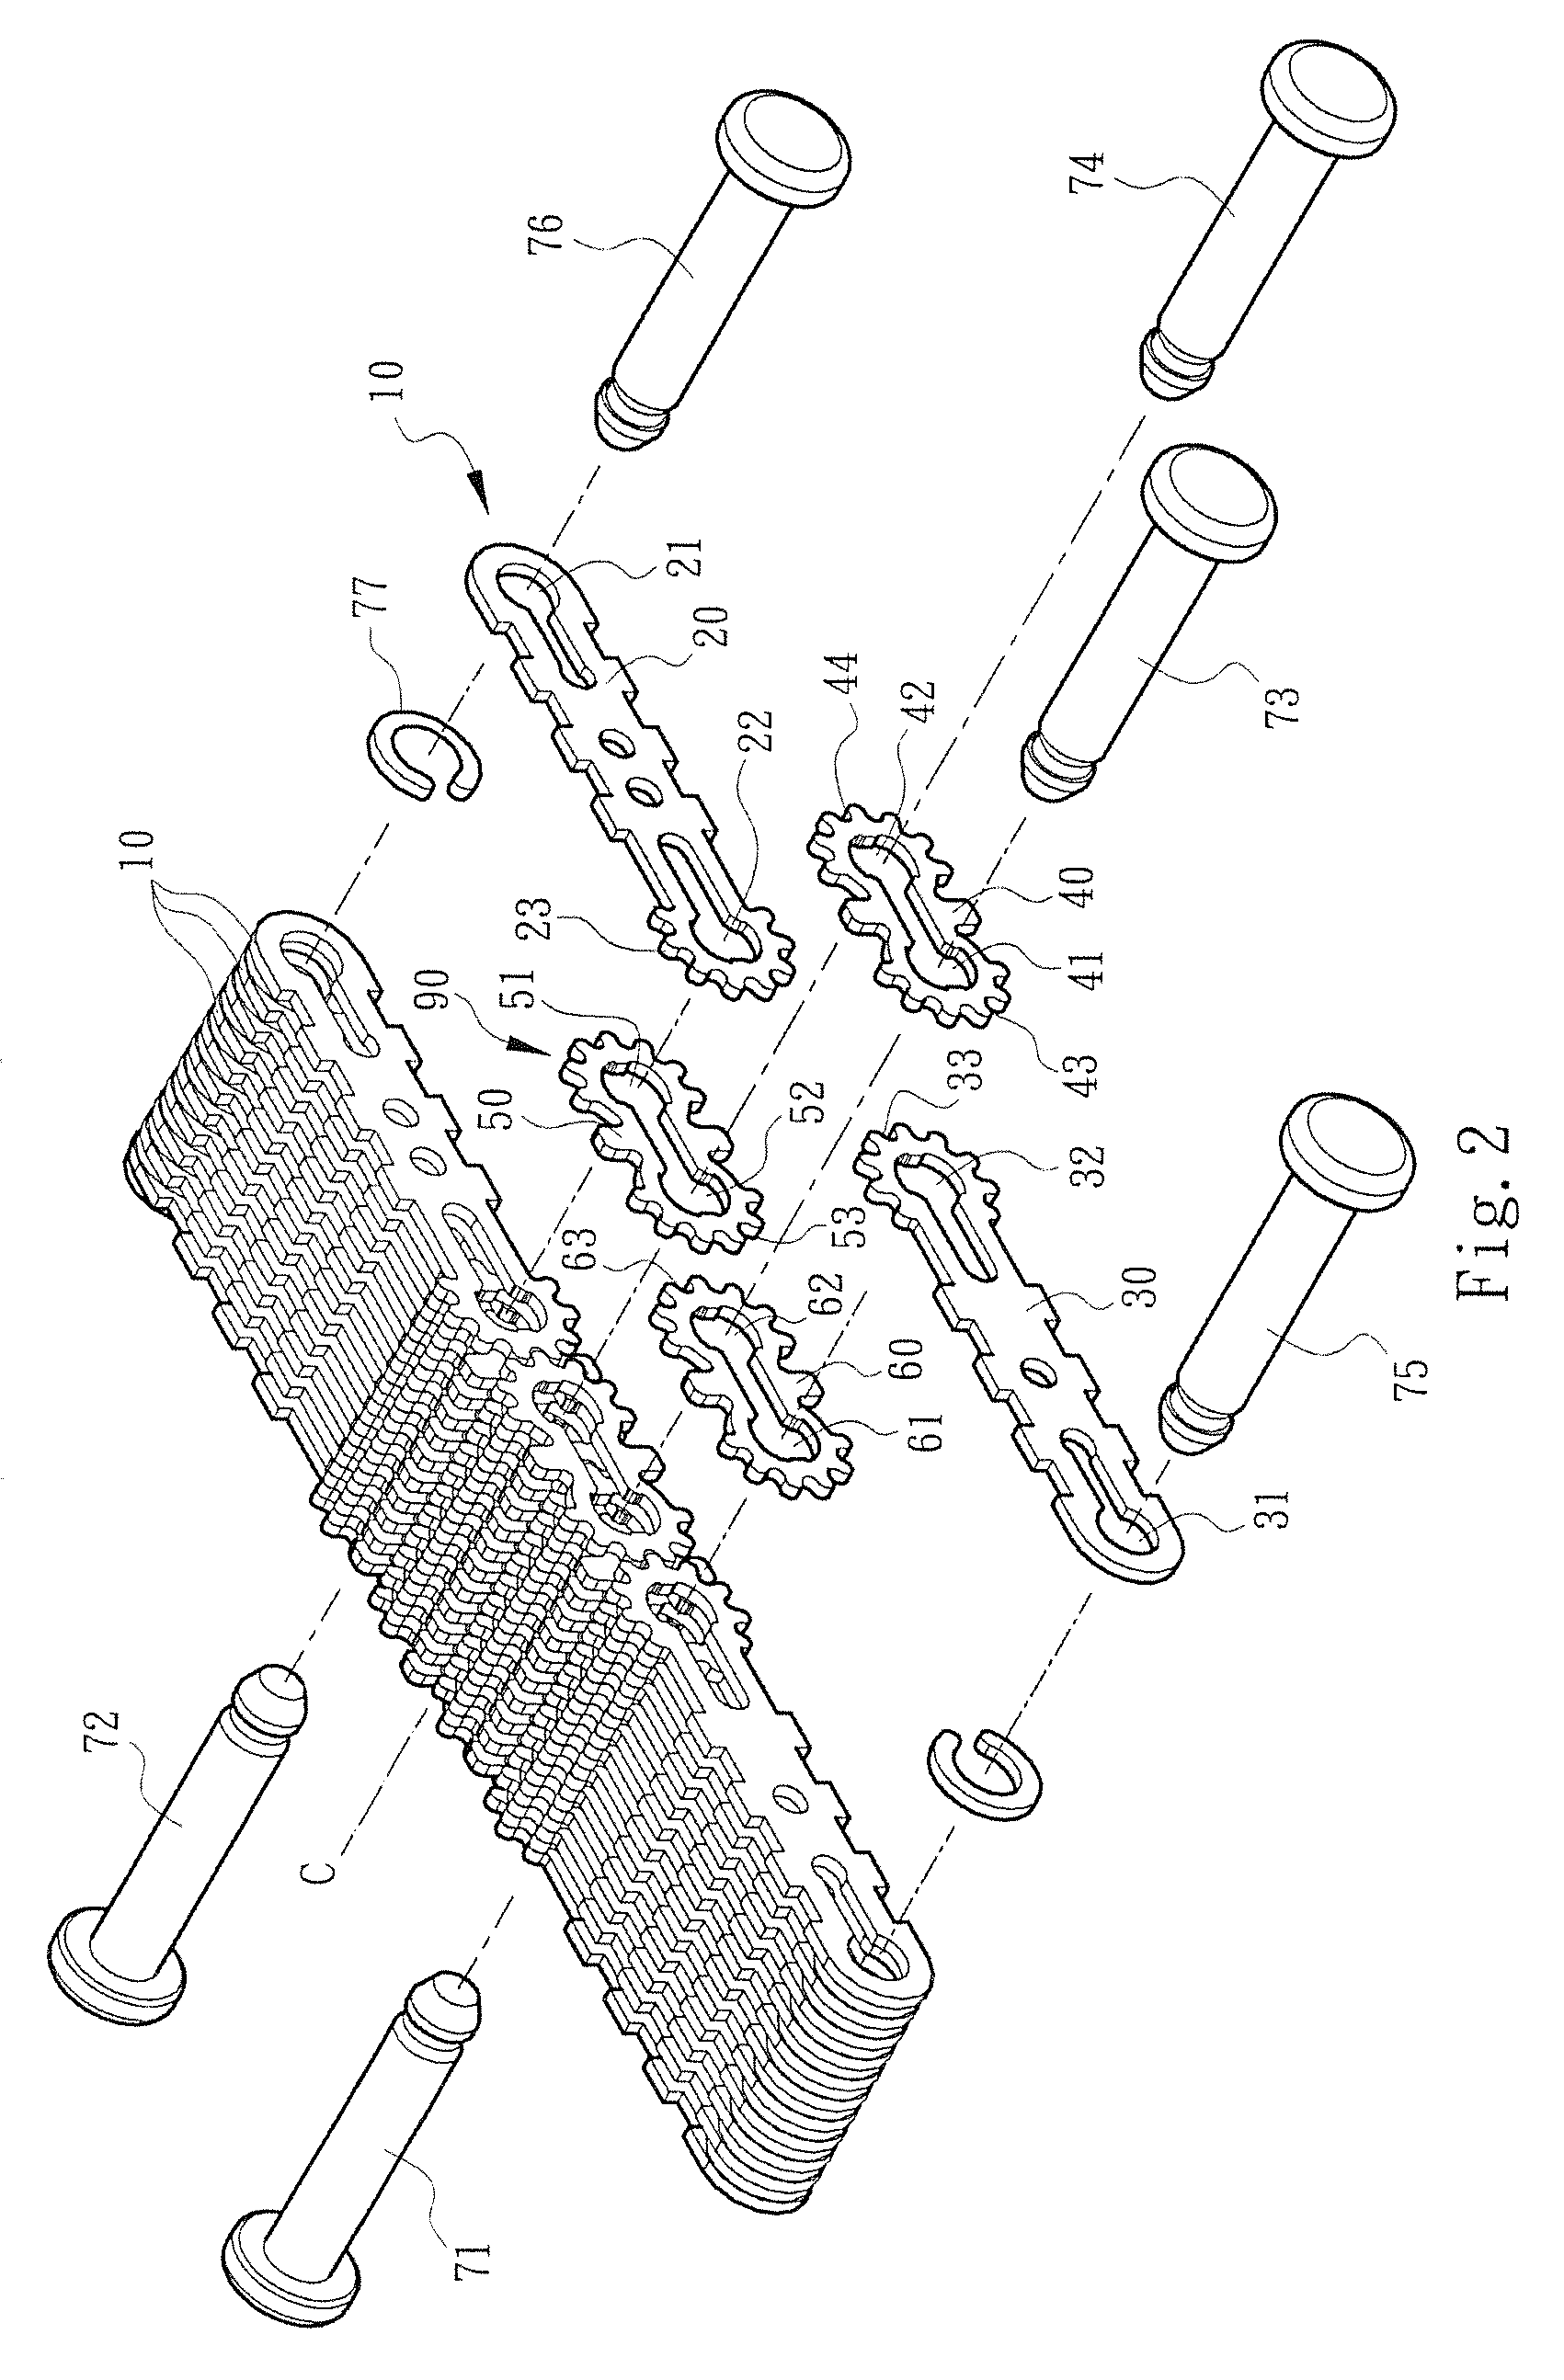 Multi-segment rotary shaft structure